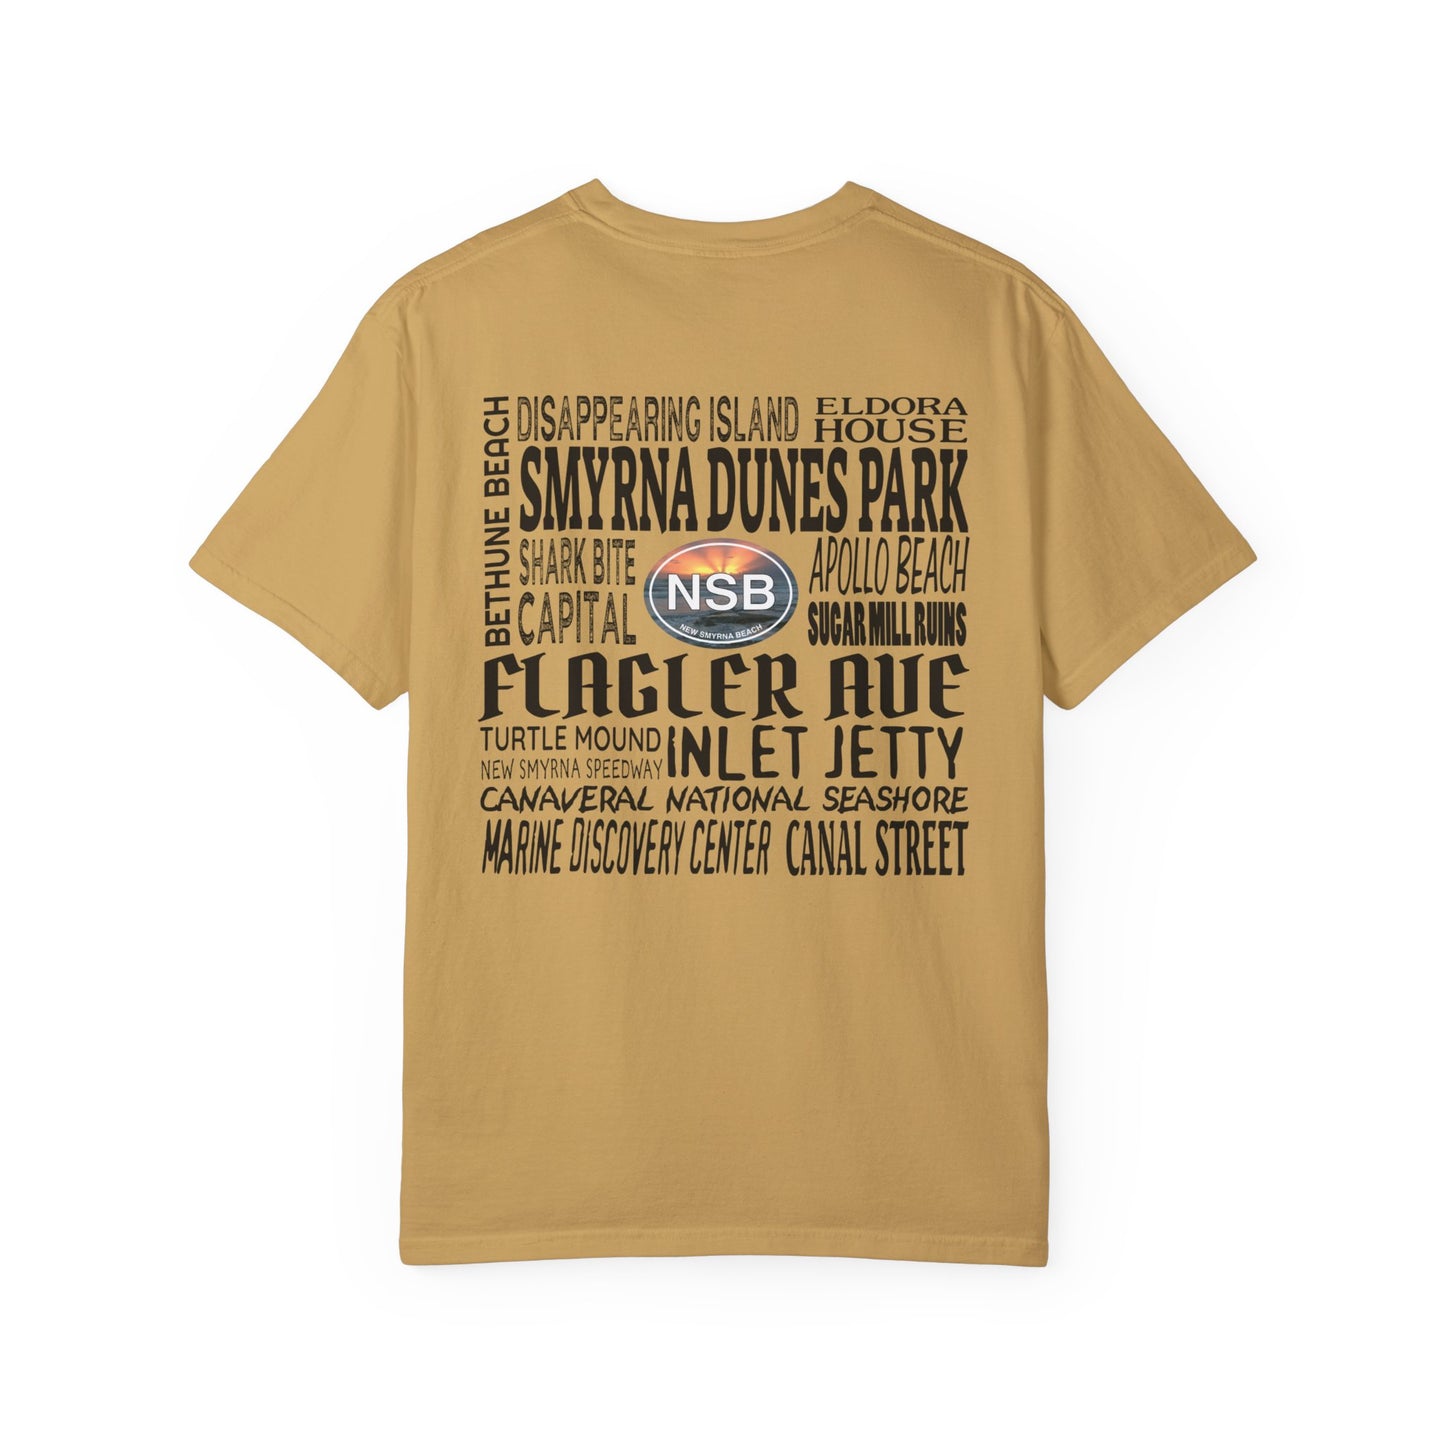 New Smyrna Beach Things to Do T-Shirt